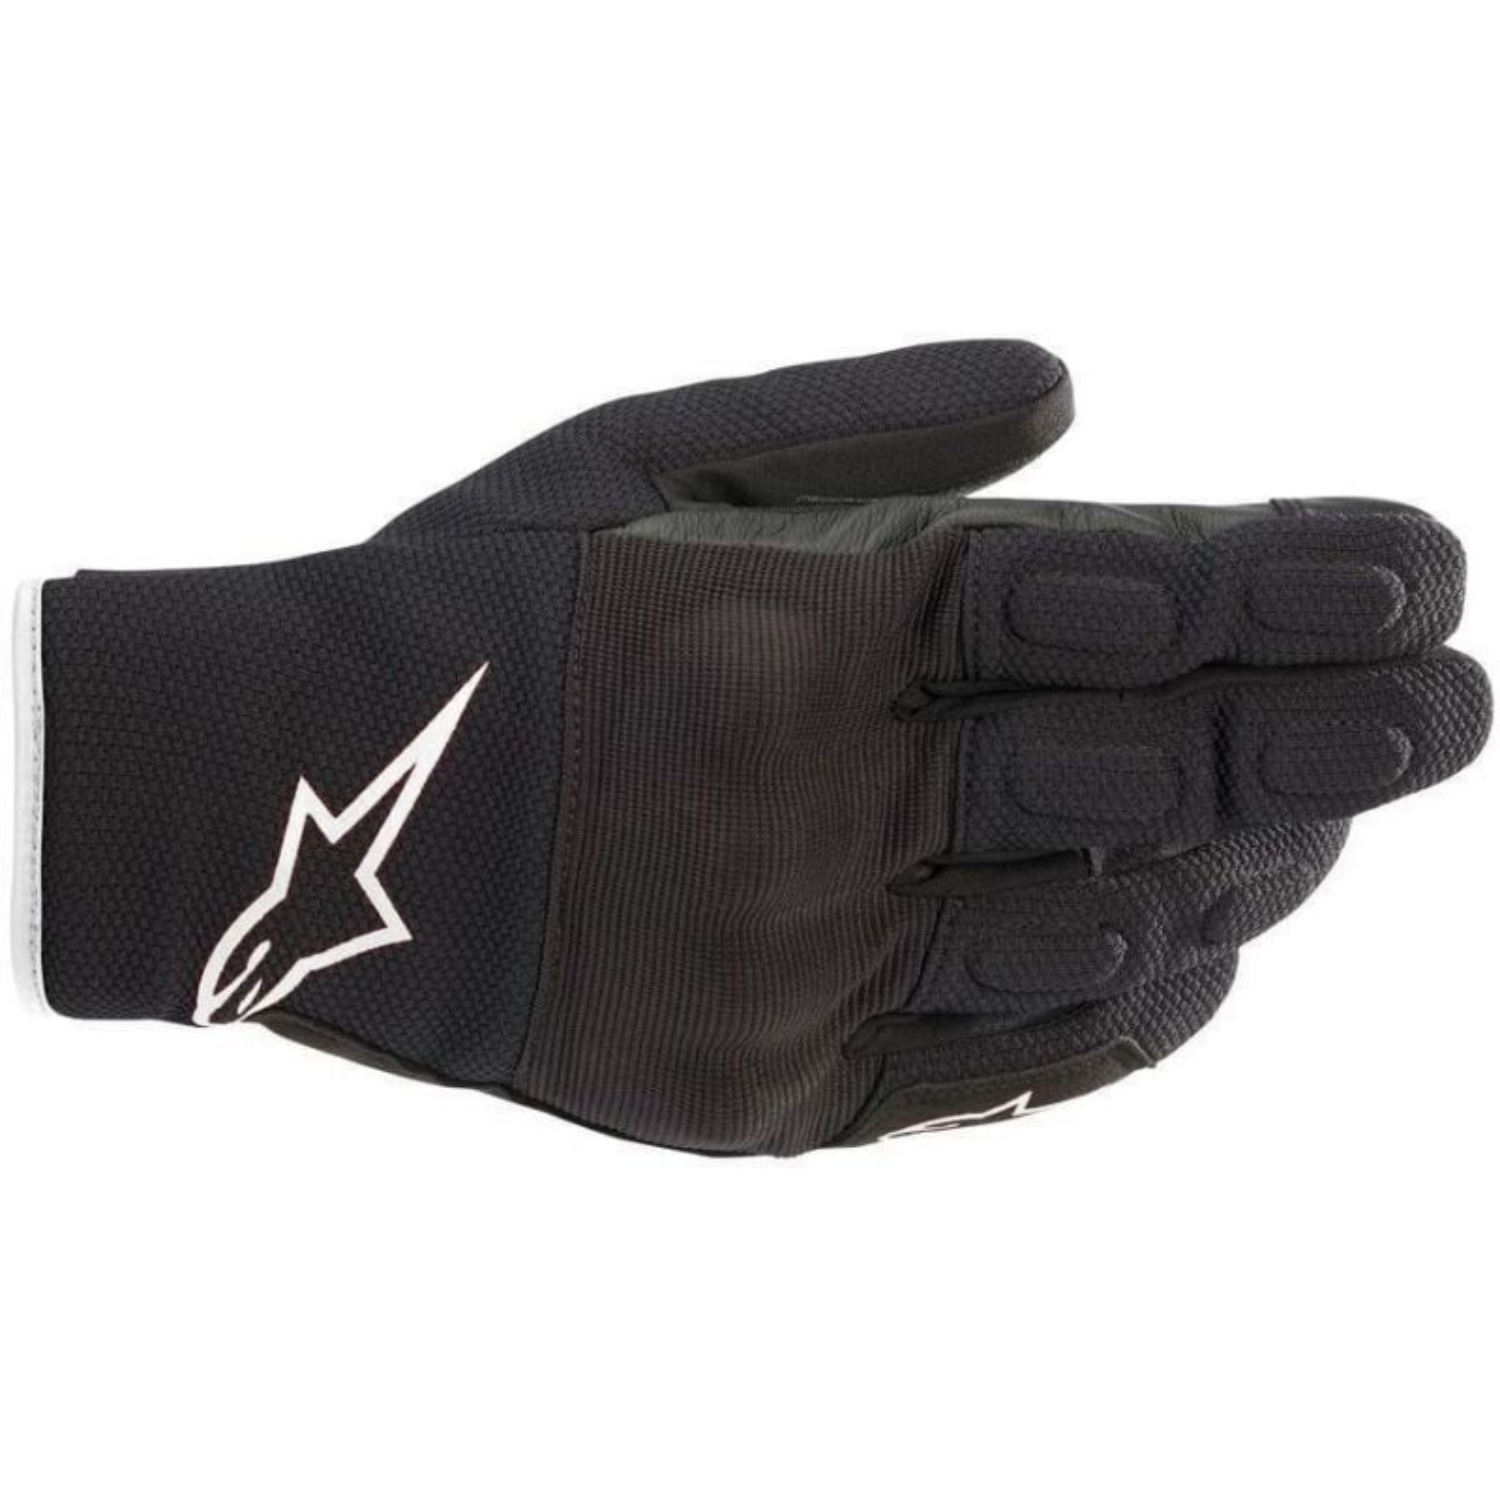 Image of Alpinestars S Max Drystar Gloves Black White Size XL ID 8059175098963